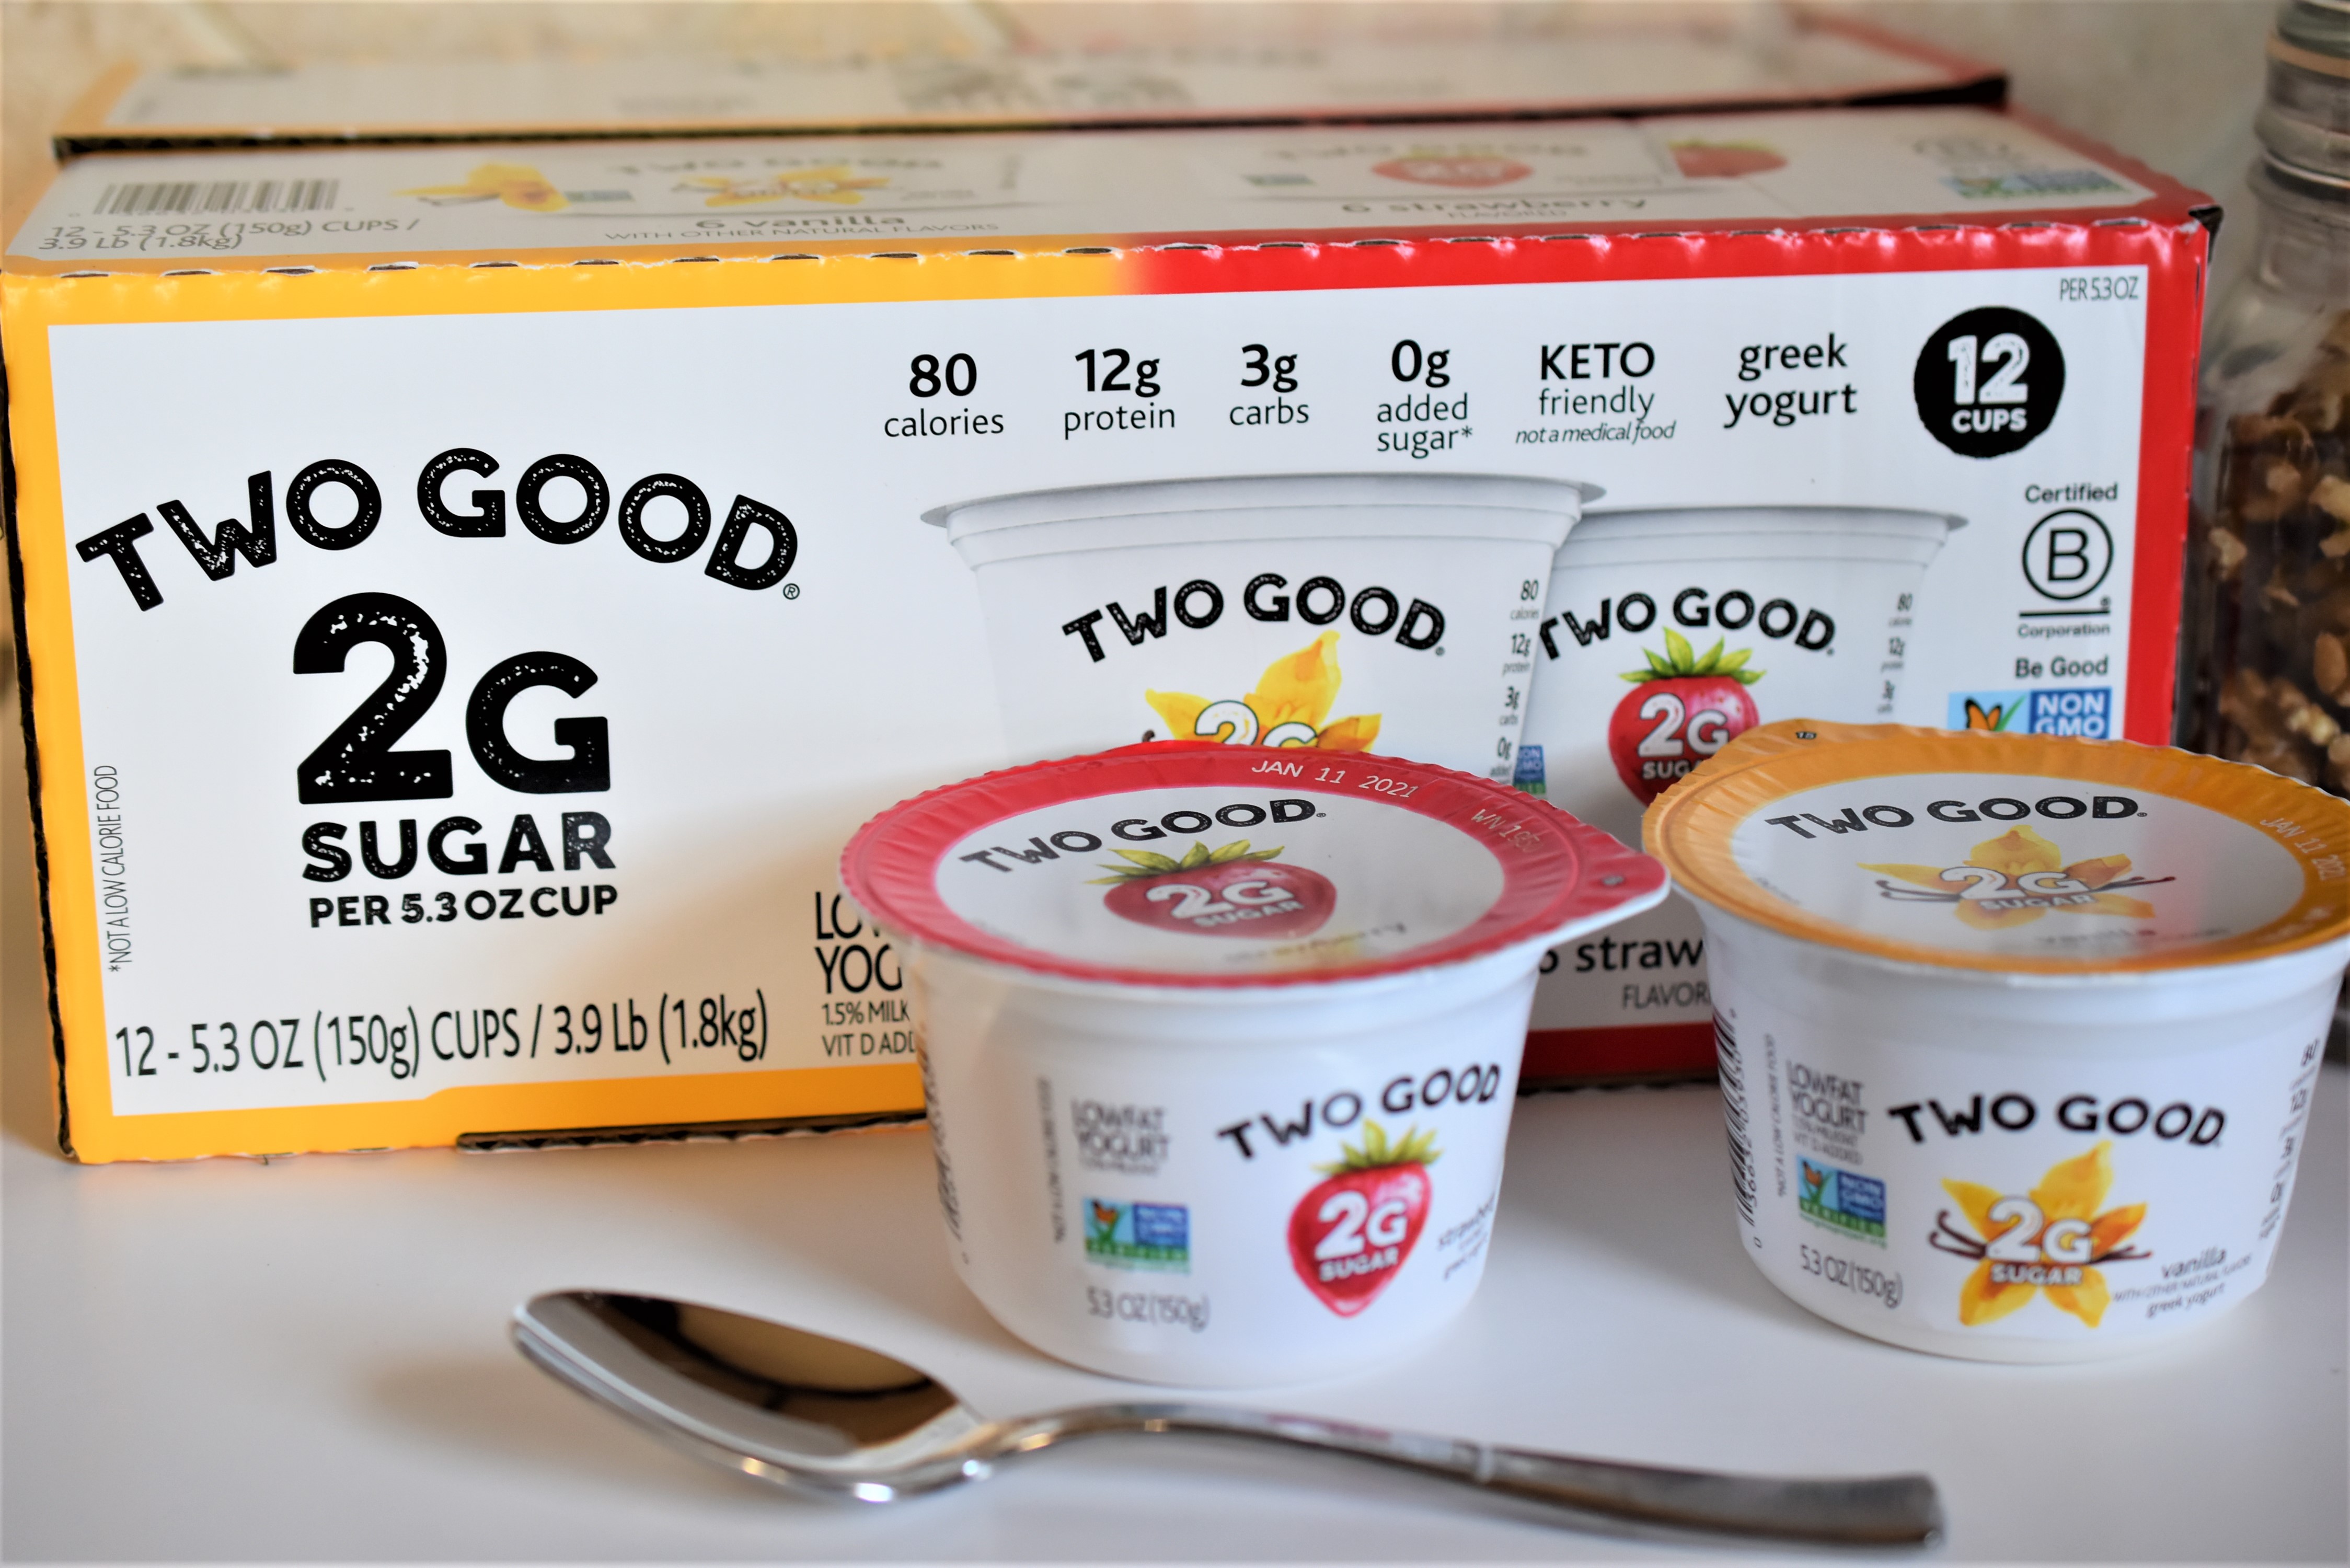 Two Good Greek Yogurt 12 Pack from Costco